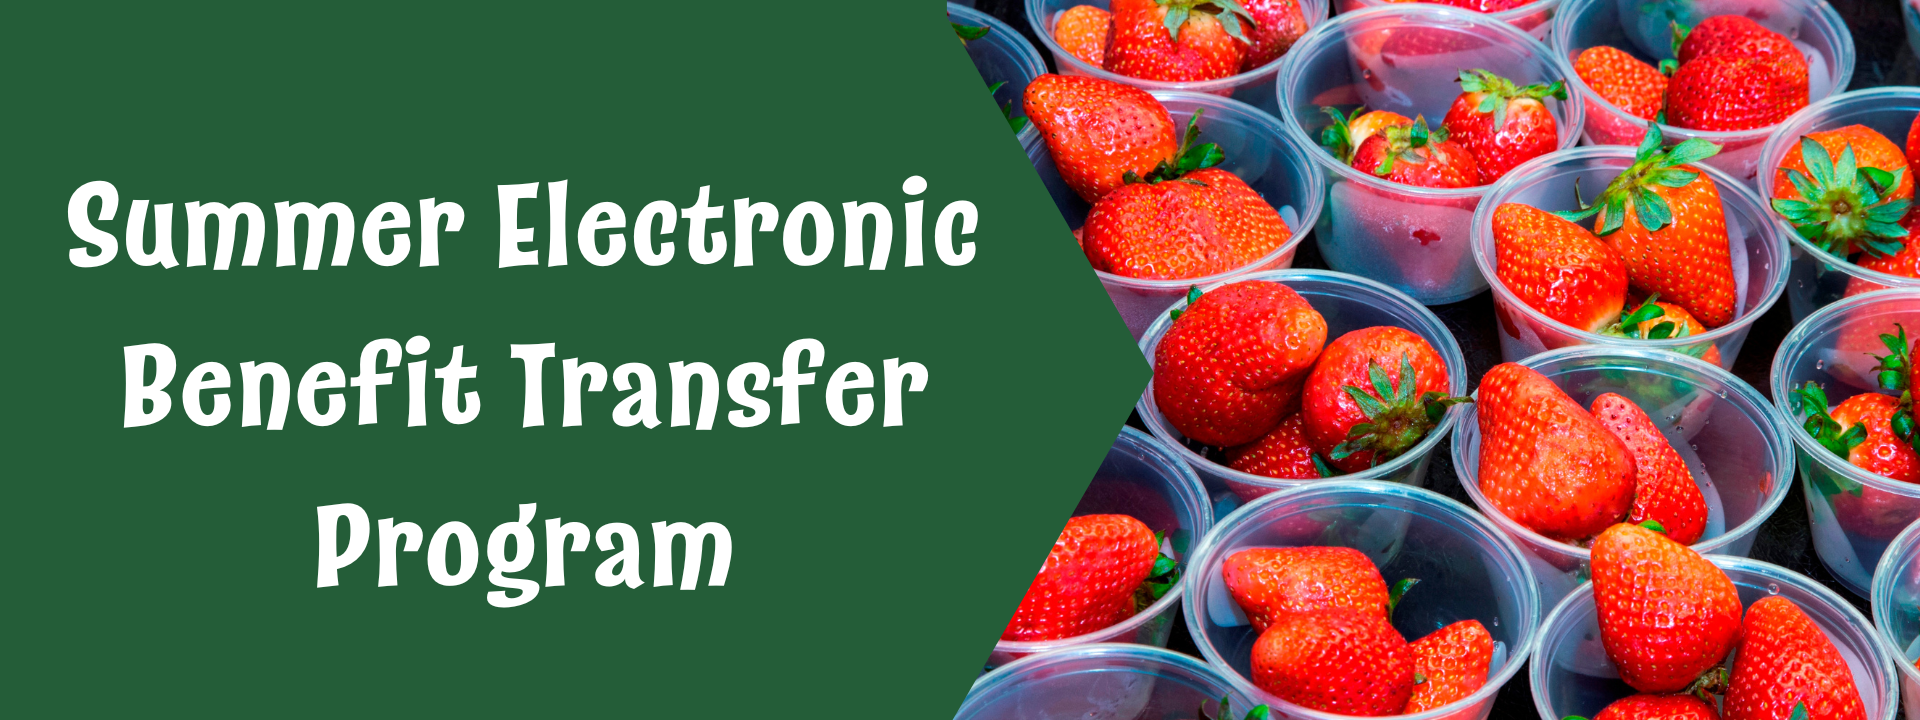 Summer Electronic Benefit Transfer Program